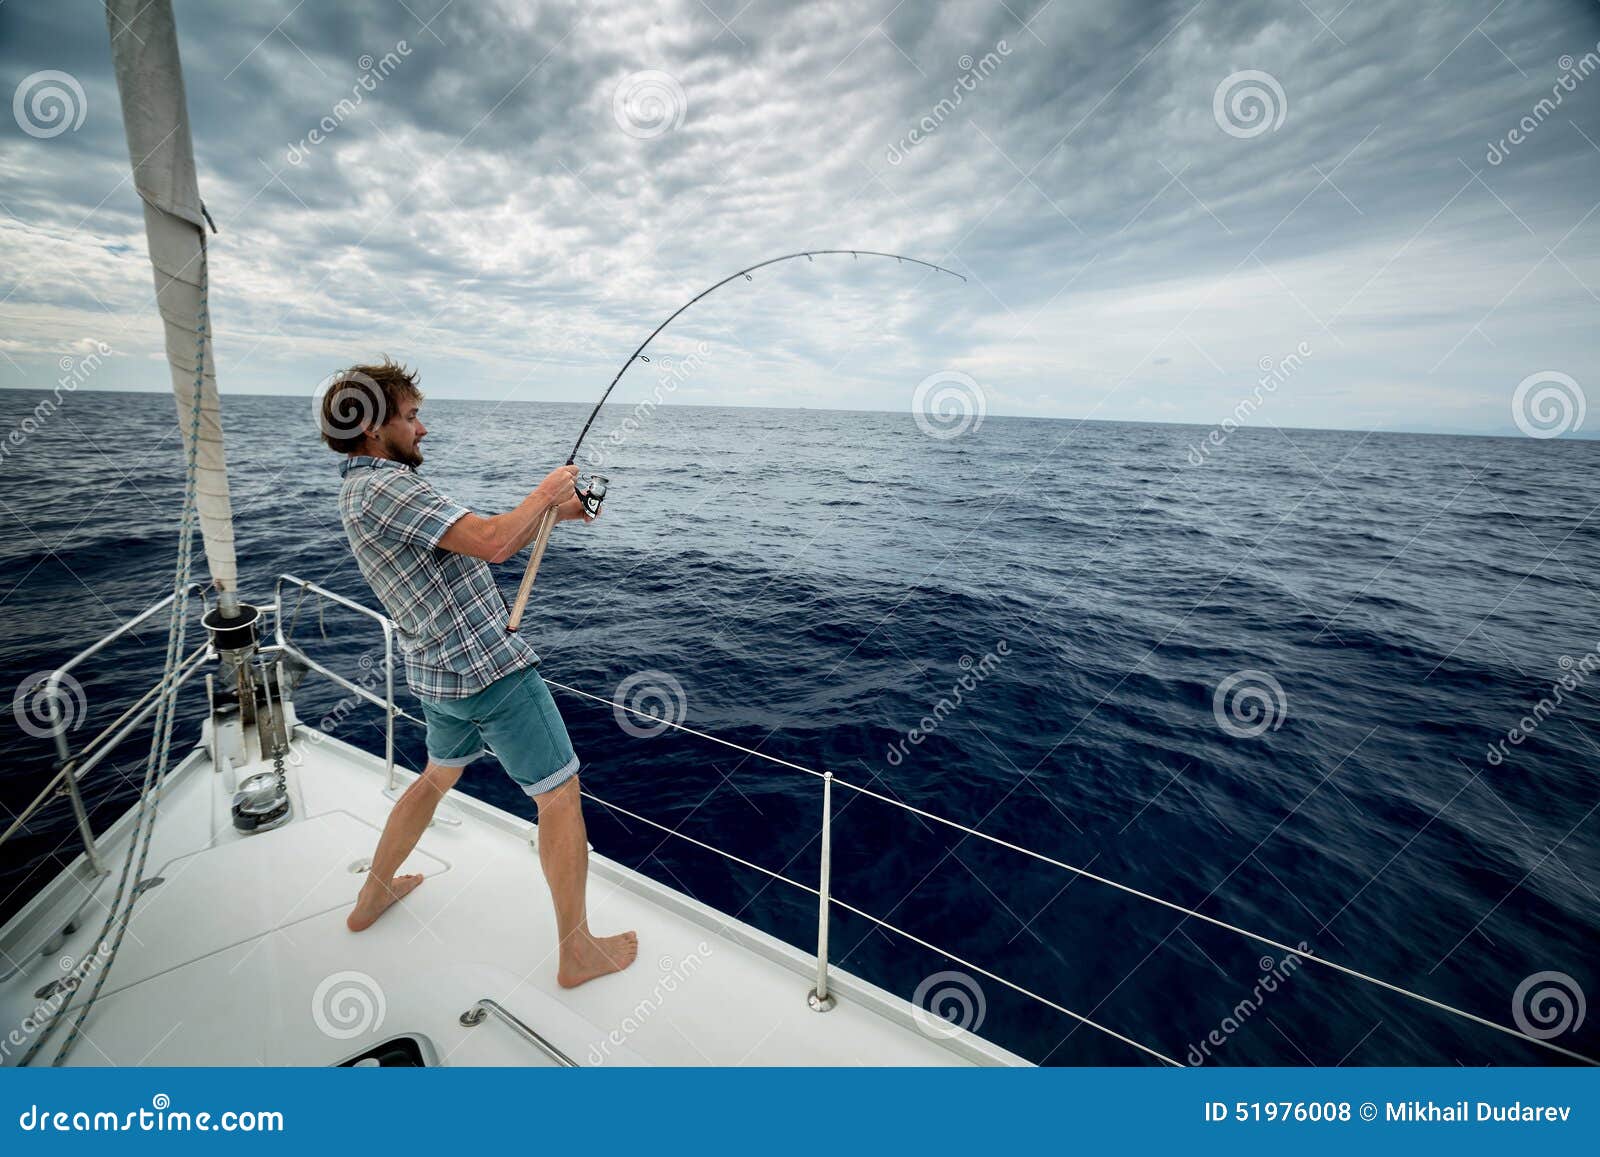 44,545 Fishing Sail Stock Photos - Free & Royalty-Free Stock